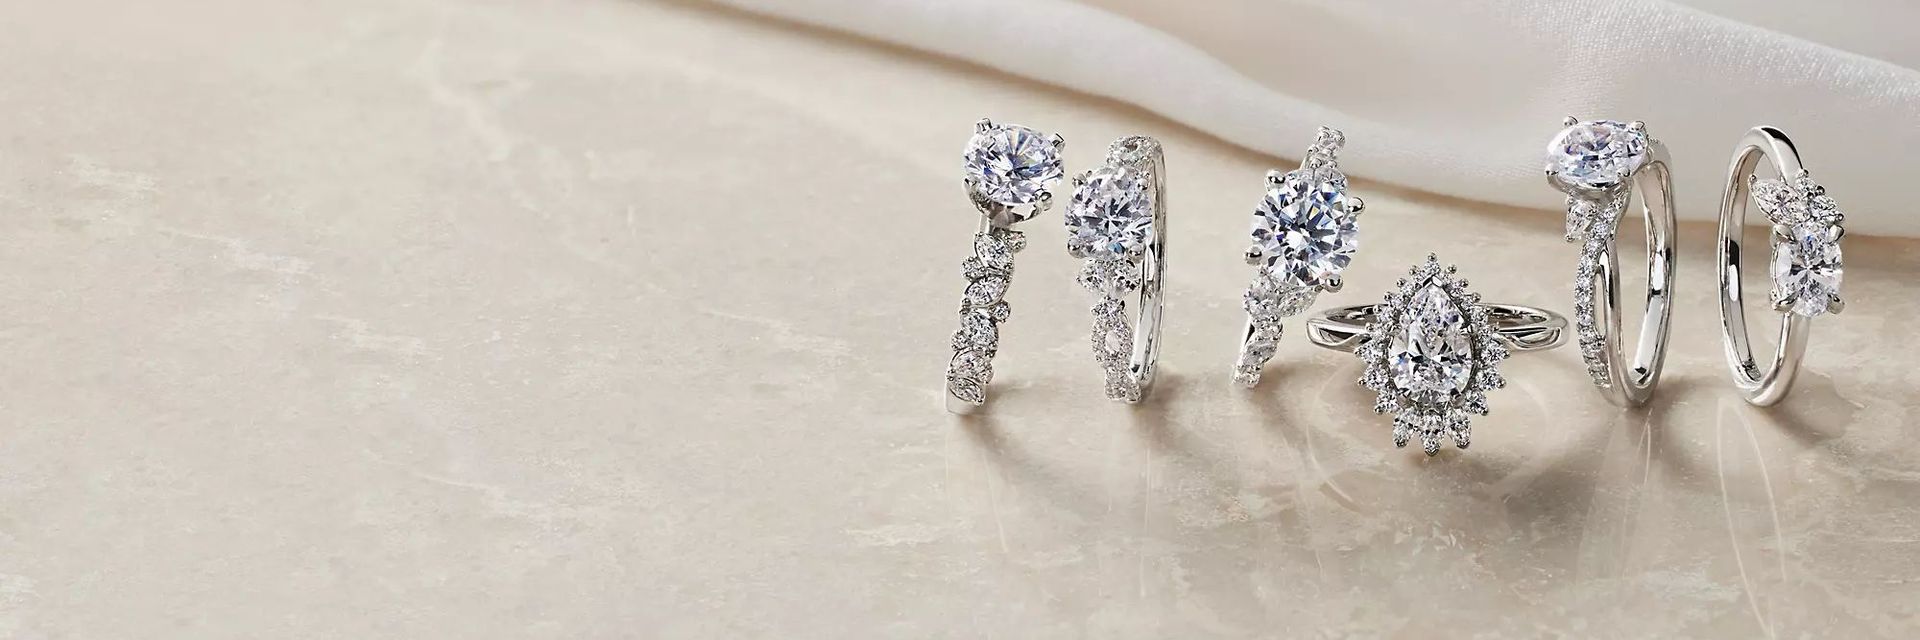 Six diamond engagement rings